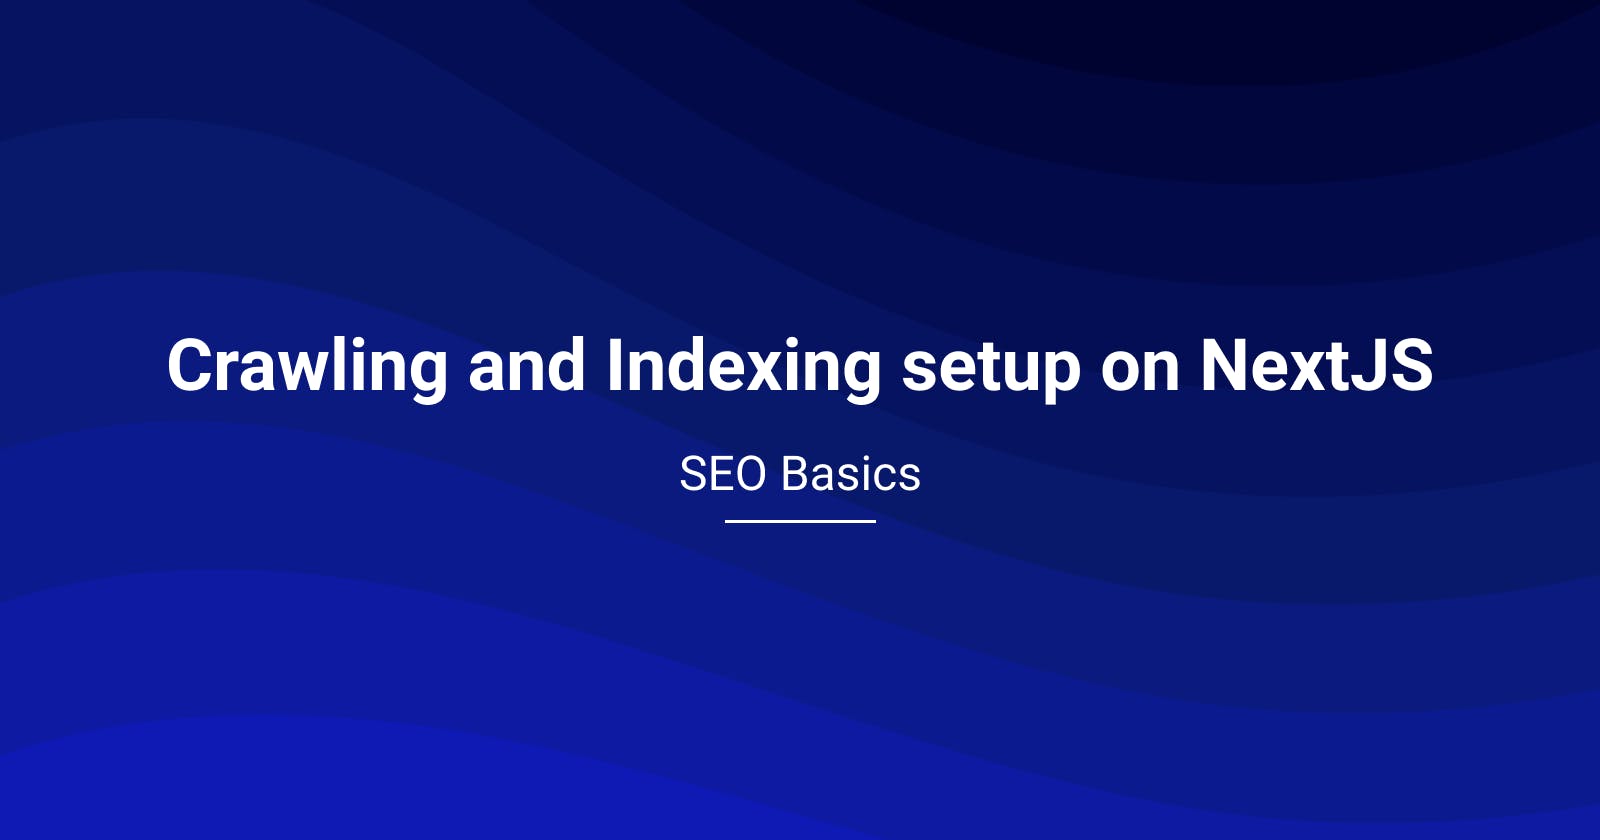 Crawling and Indexing setup on NextJS | SEO basics with NextJS